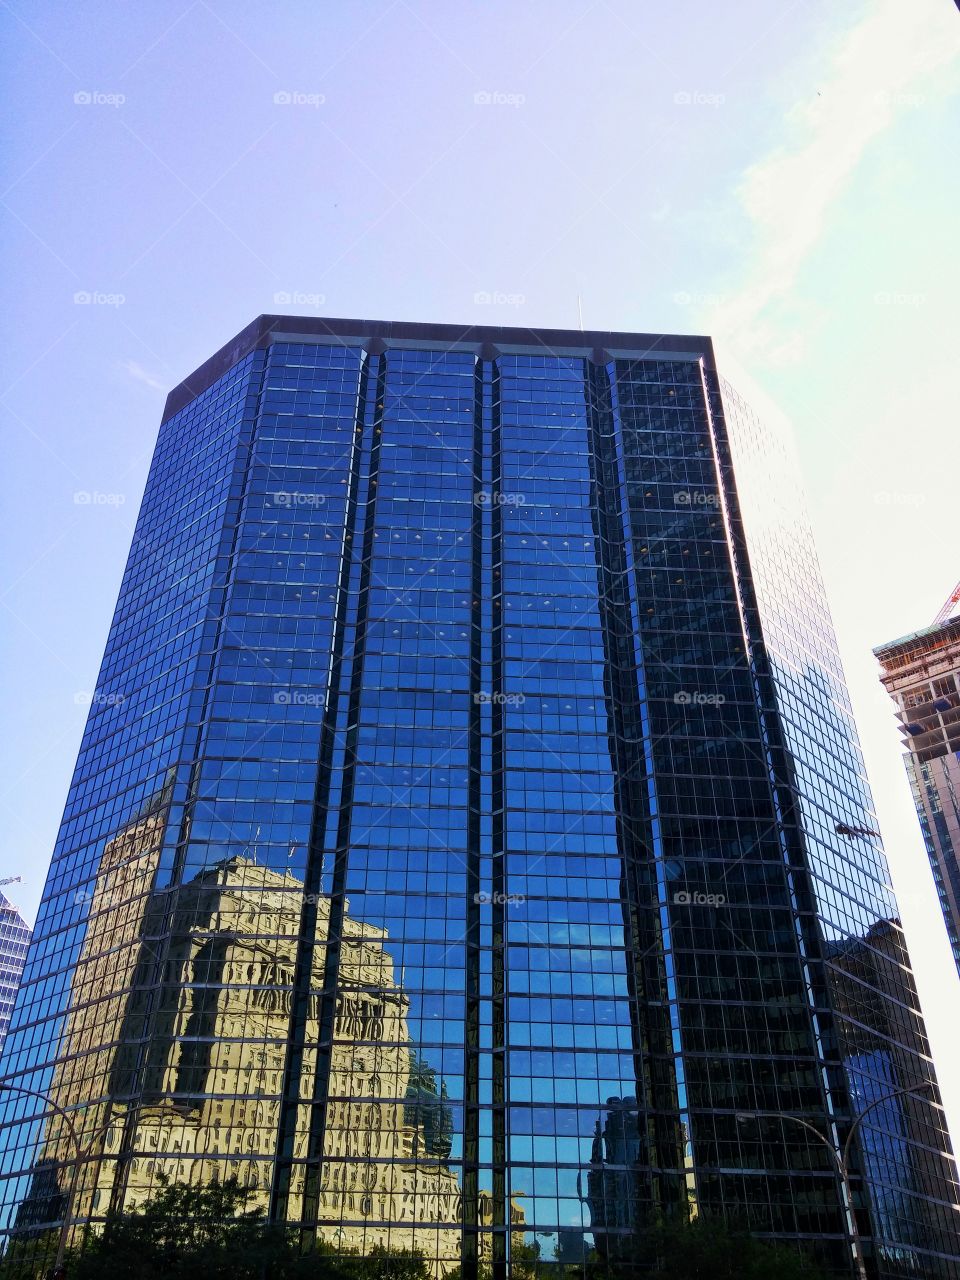 Skyscraper reflects old chur